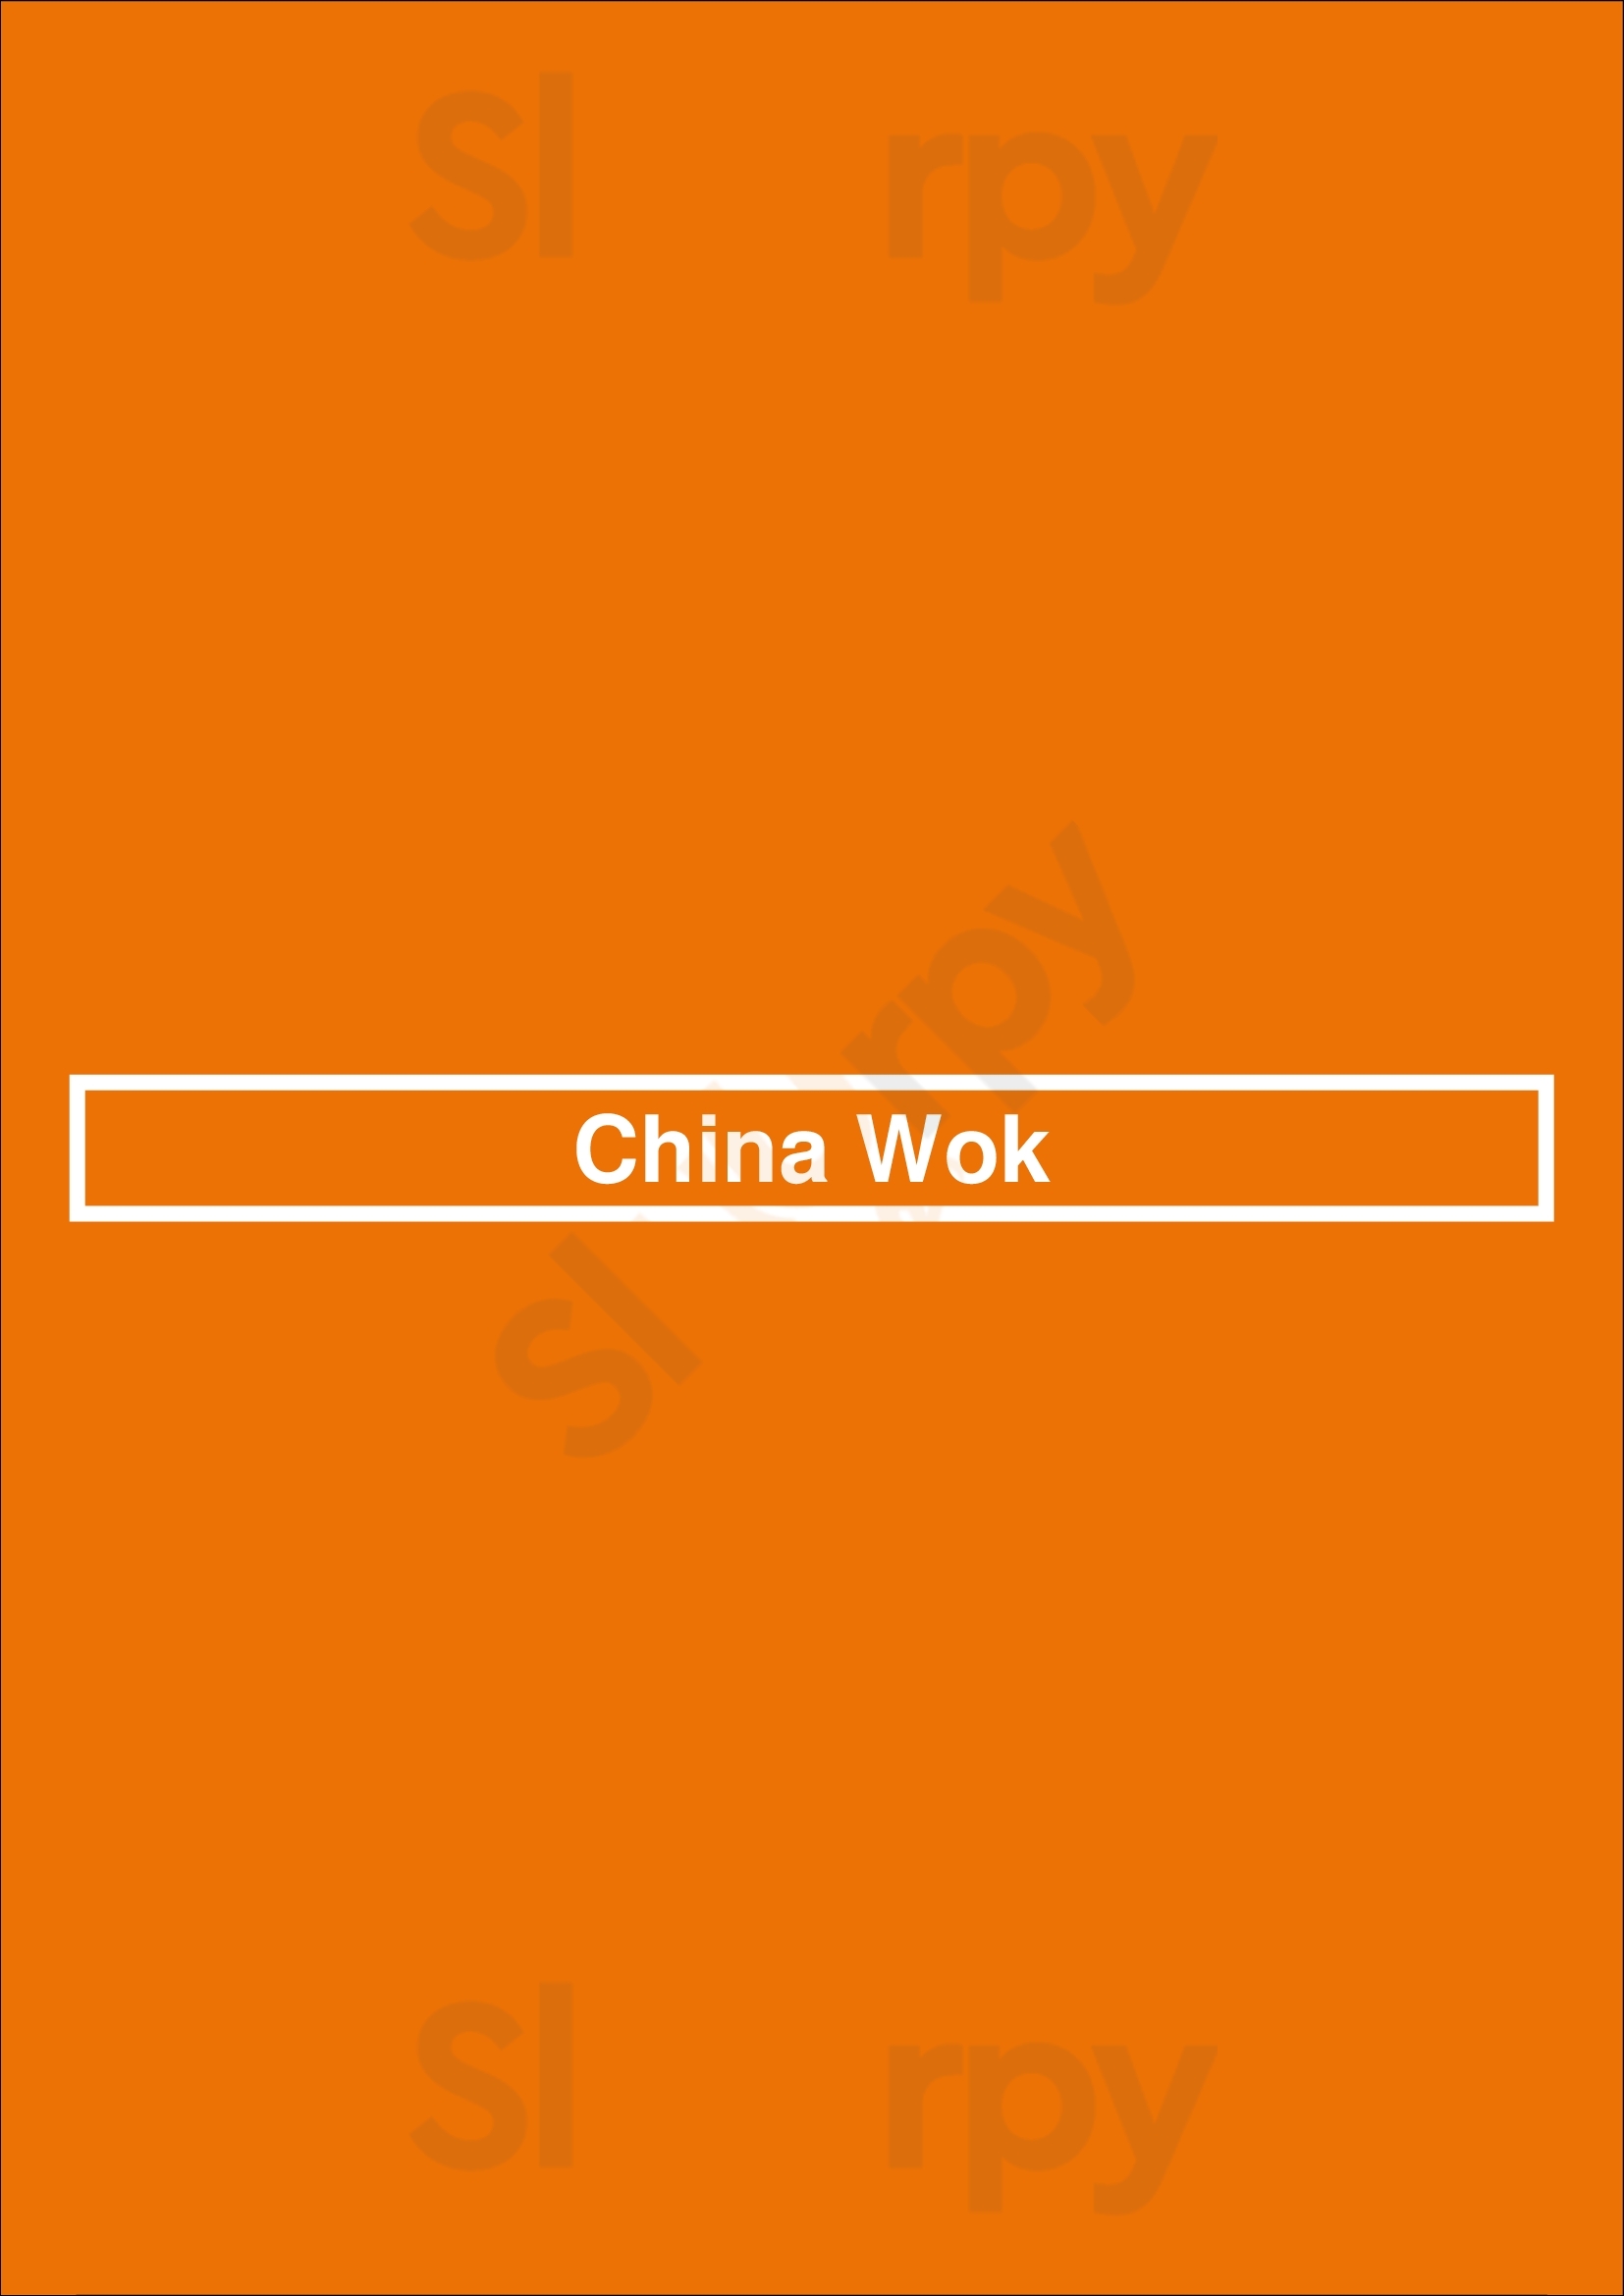 China Wok Beverly Menu - 1